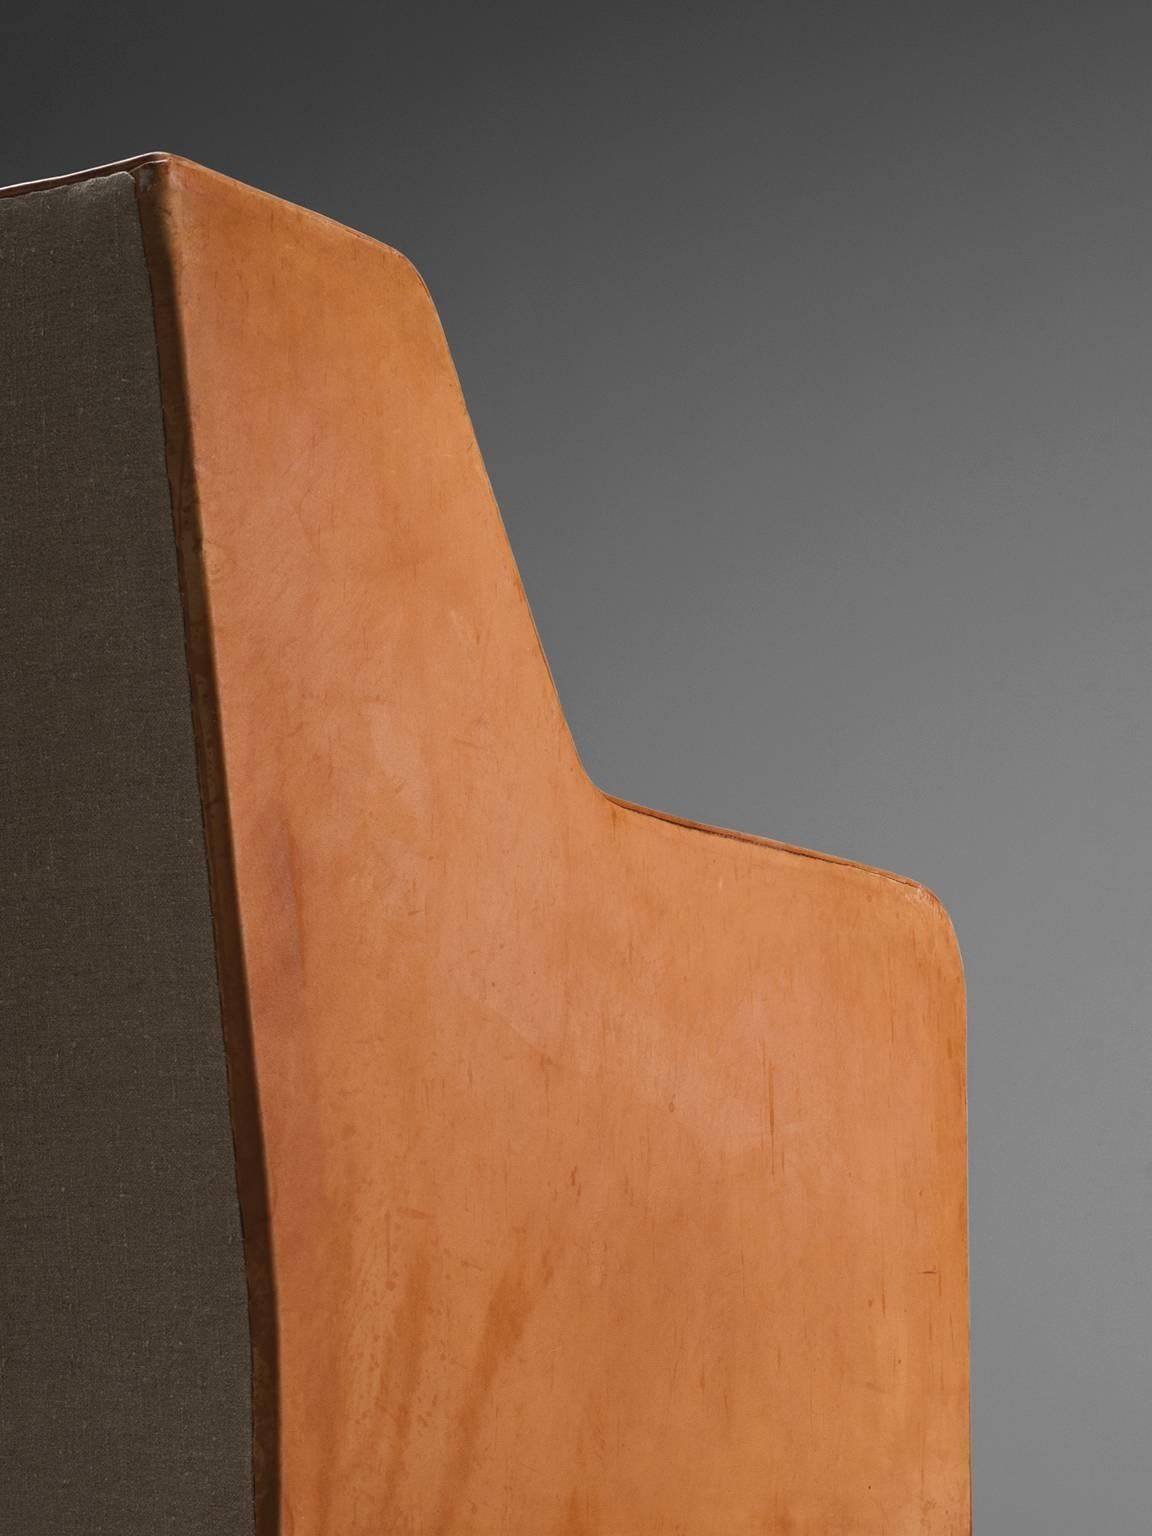 Kaare Klint Sofa in Oak and Original Cognac Leather 1